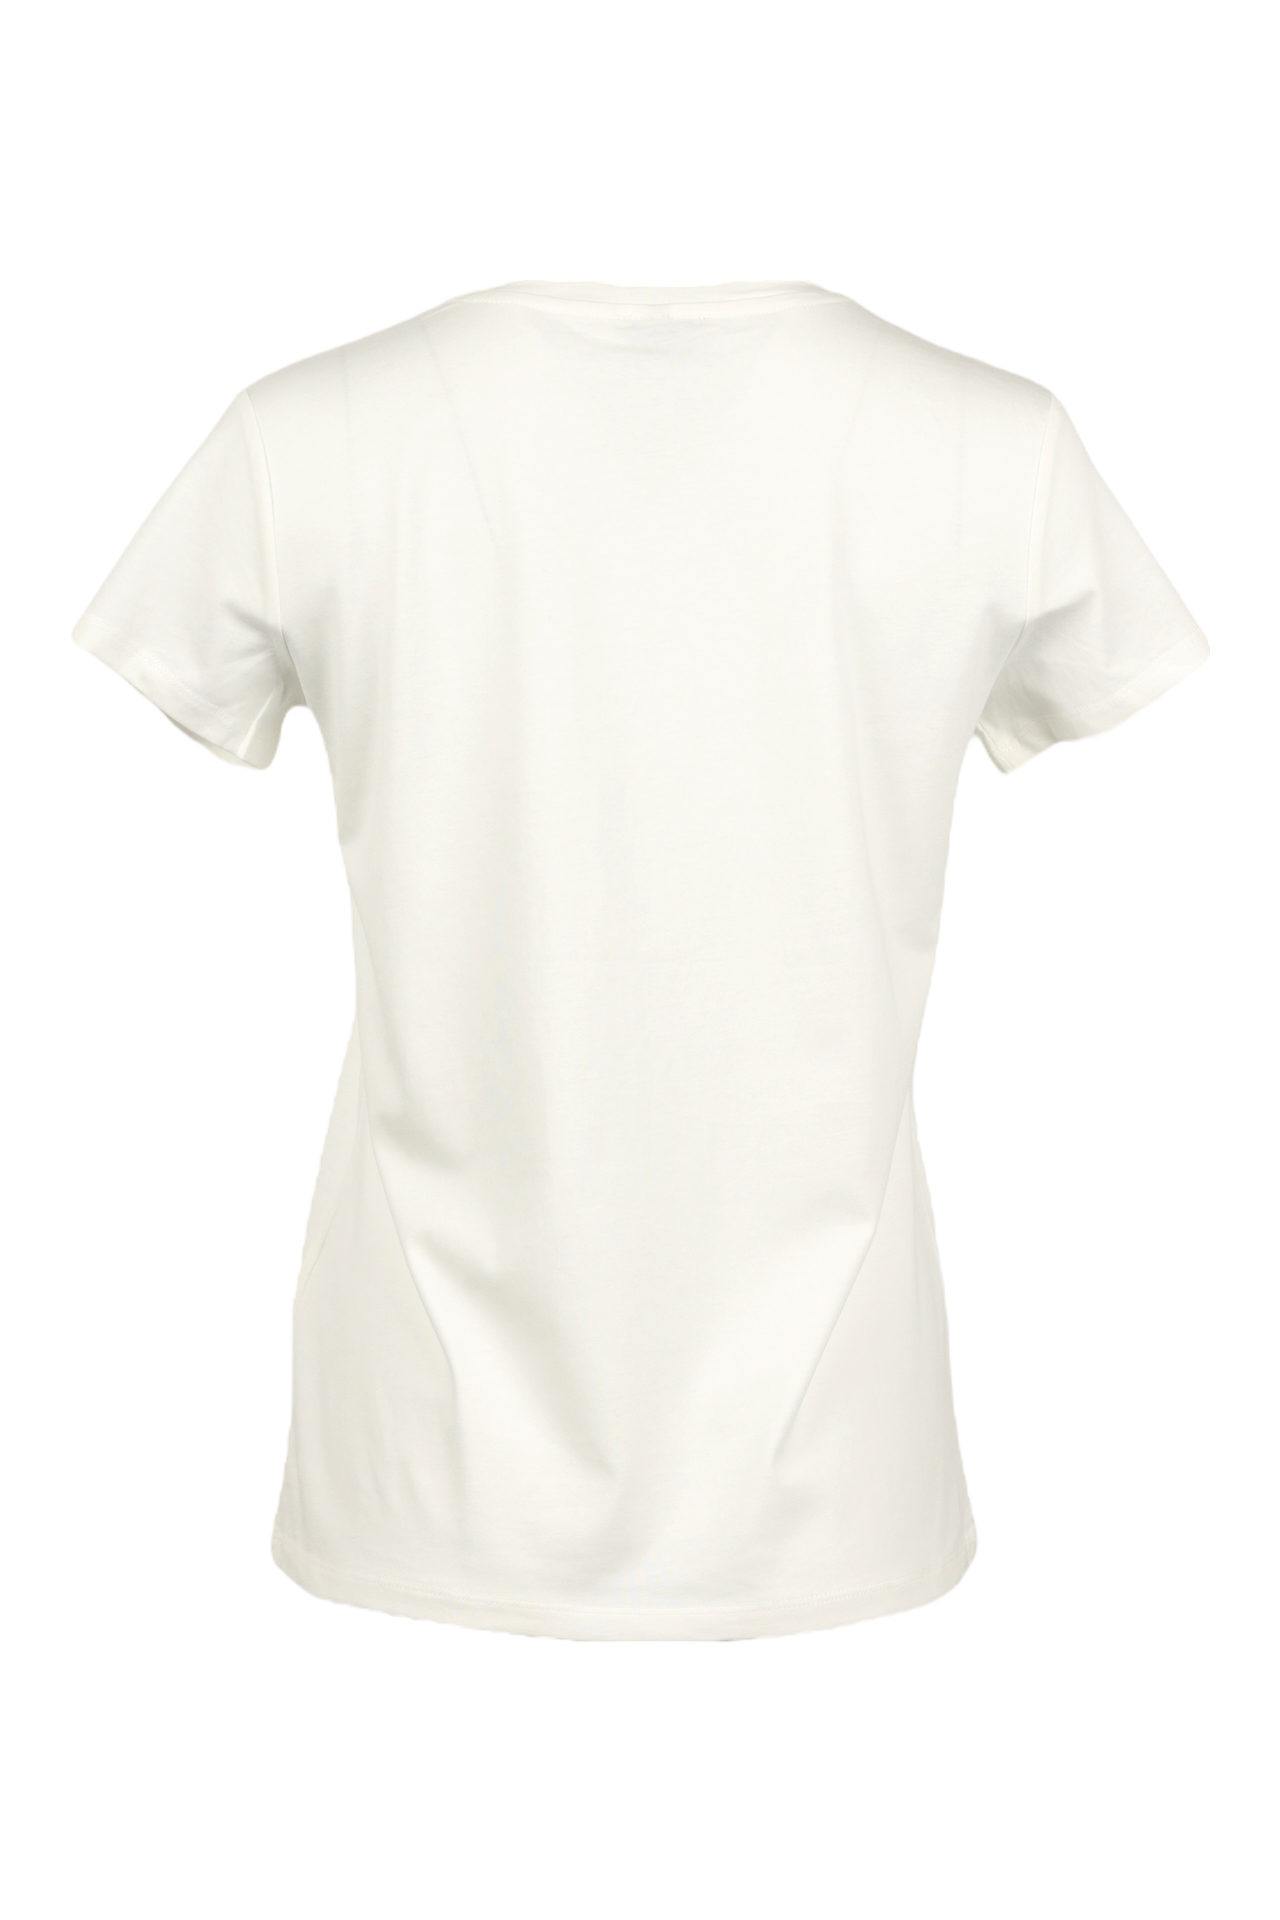 Iconic White T-Shirt 100% Cotton